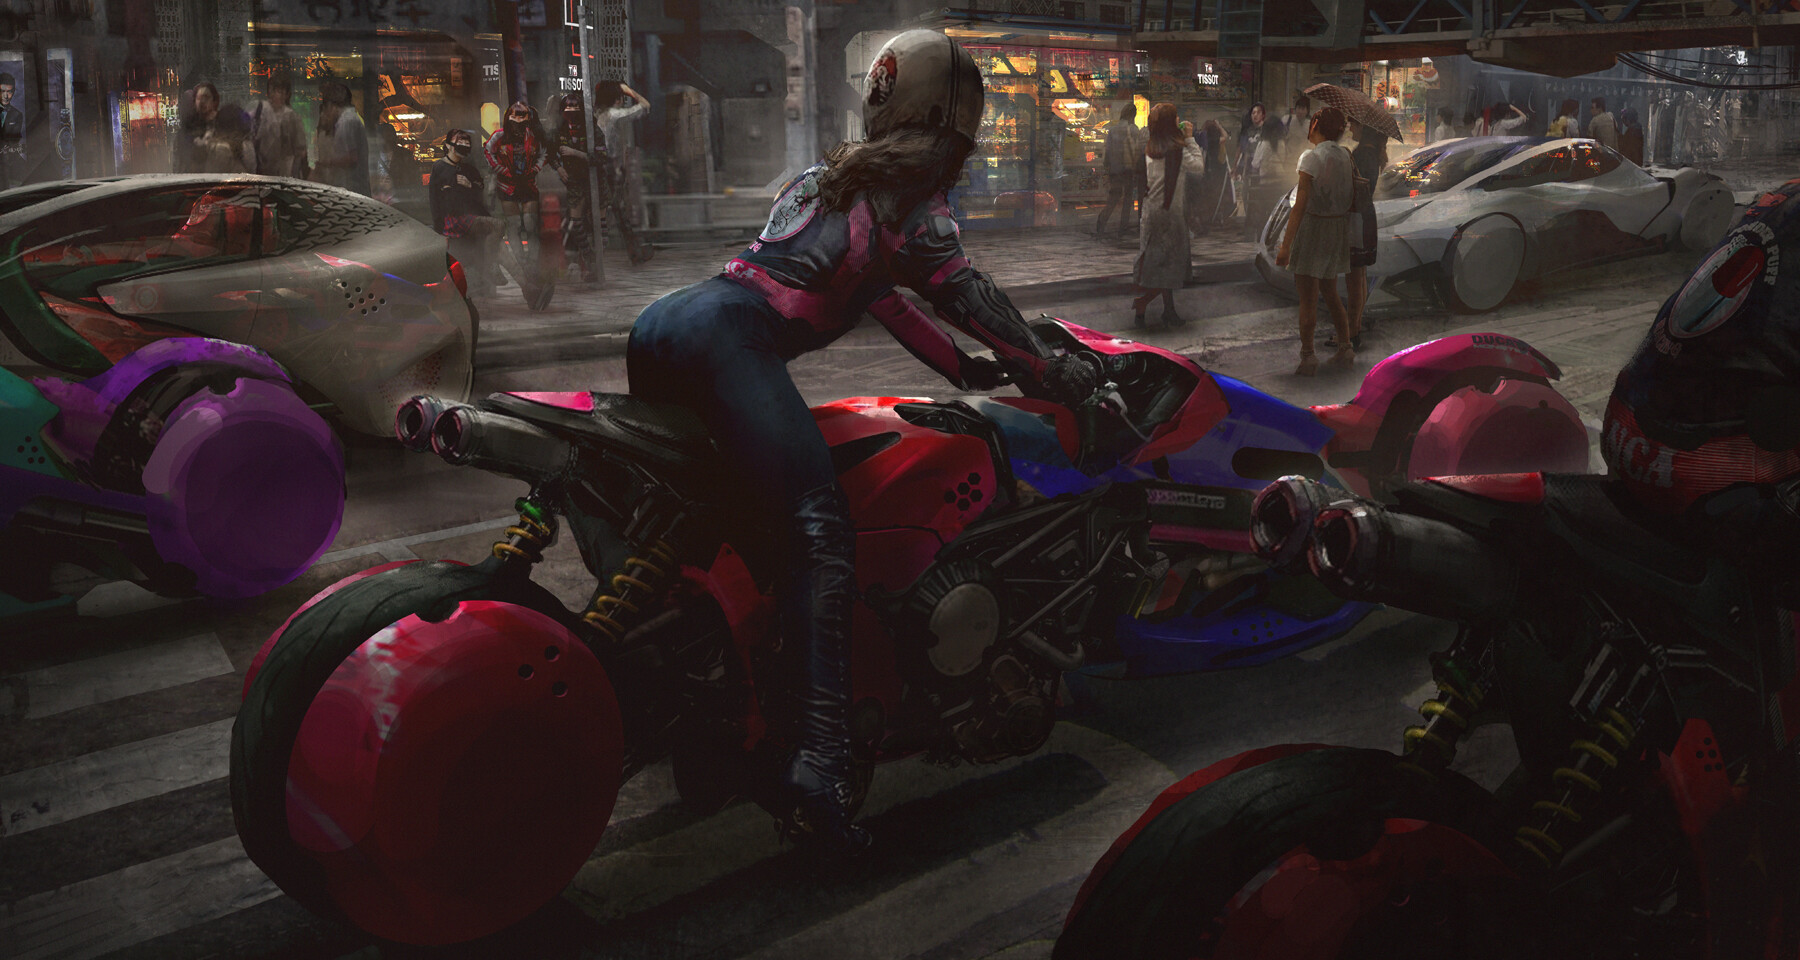 Women Eddie Mendoza Digital Art Futuristic Science Fiction Motorcycle 1800x960